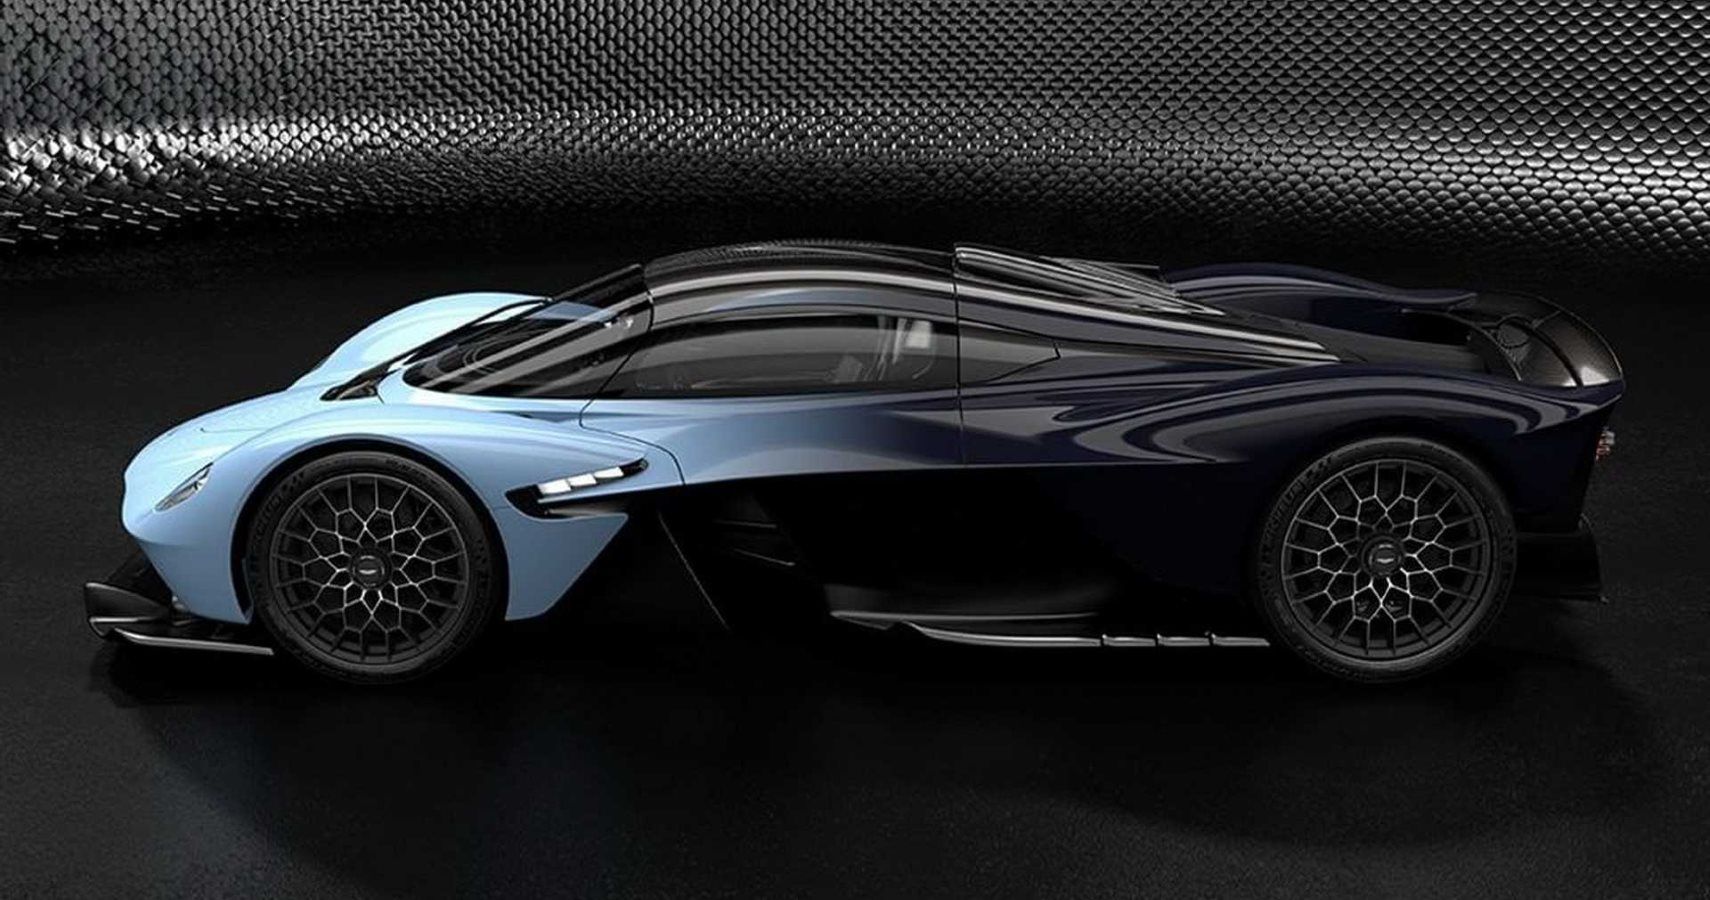 Aston Martin Reveals Stylish Valkyrie Hypercar With Stunning Photos